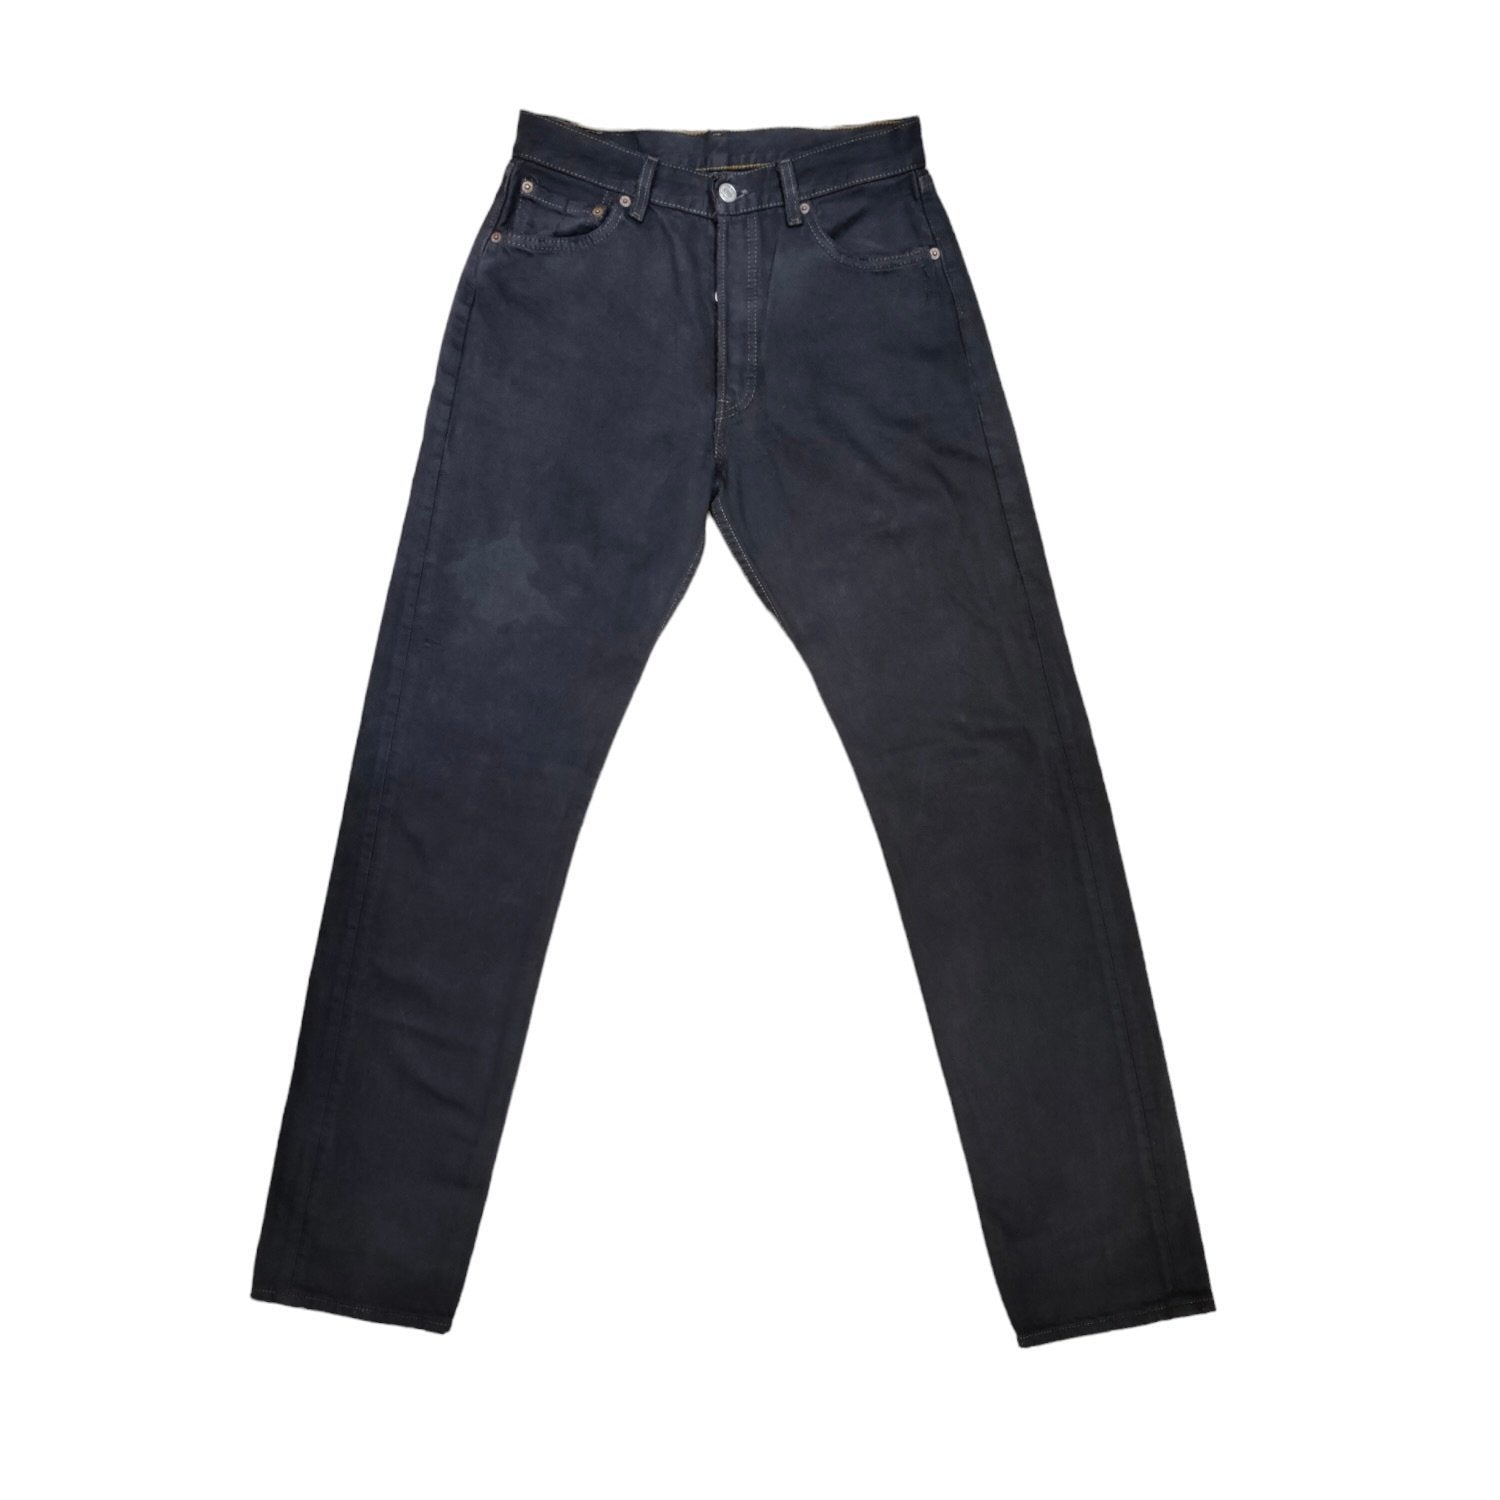 Vintage Levis 501 Black/Grey Jeans (W30/L34) (W)